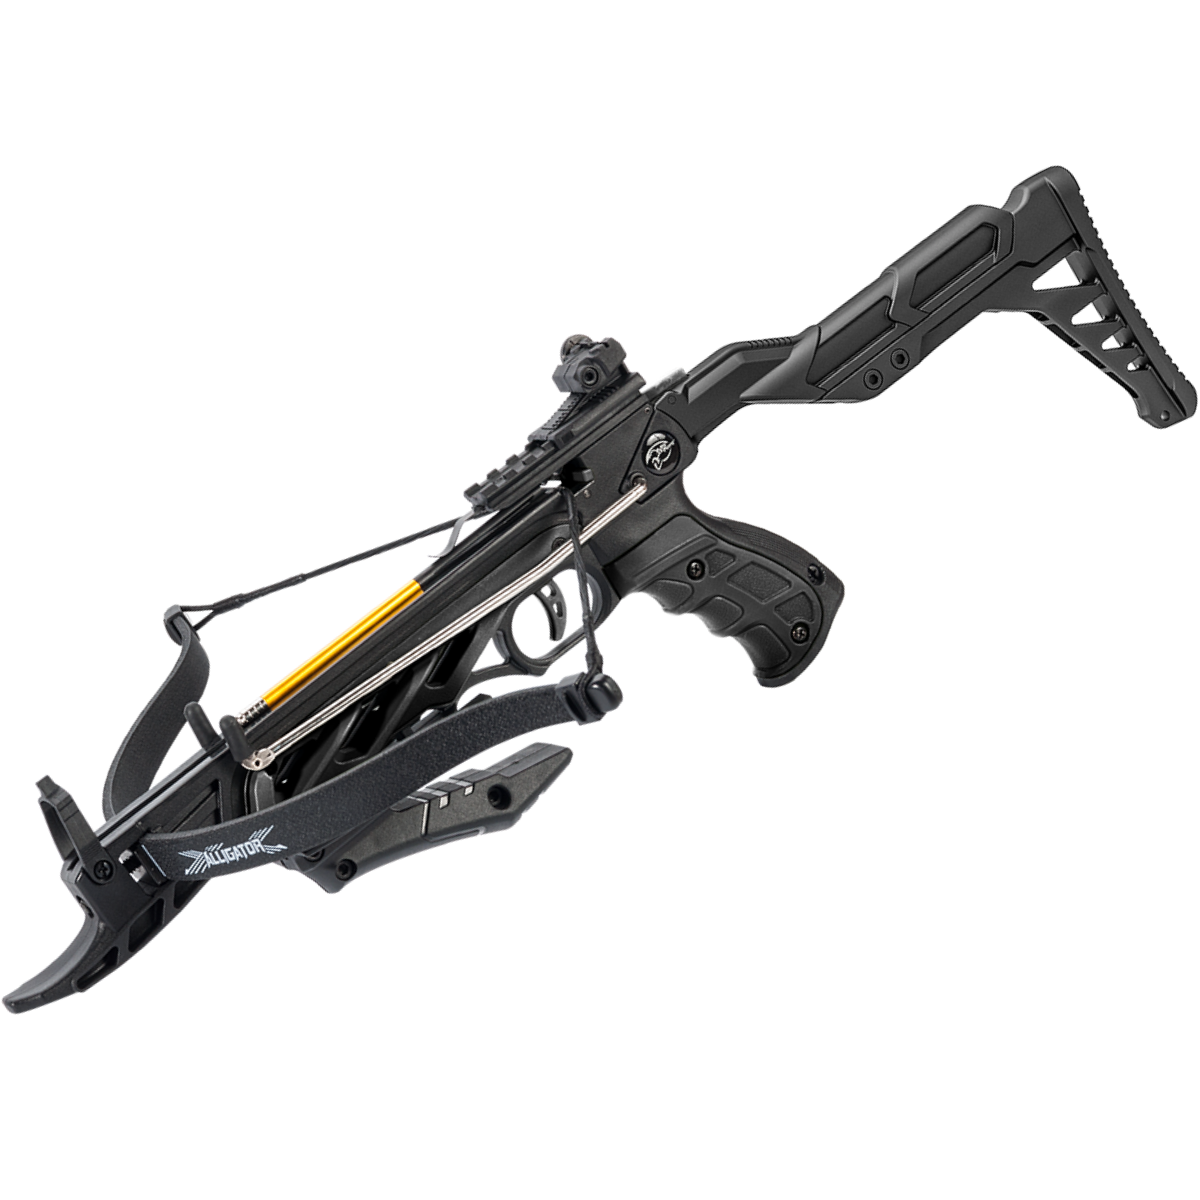 Man Kung MK-TCS2BK Alligator Deluxe Pistol Crossbow - Black - Fast UK Shipping | Tactical Archery UK